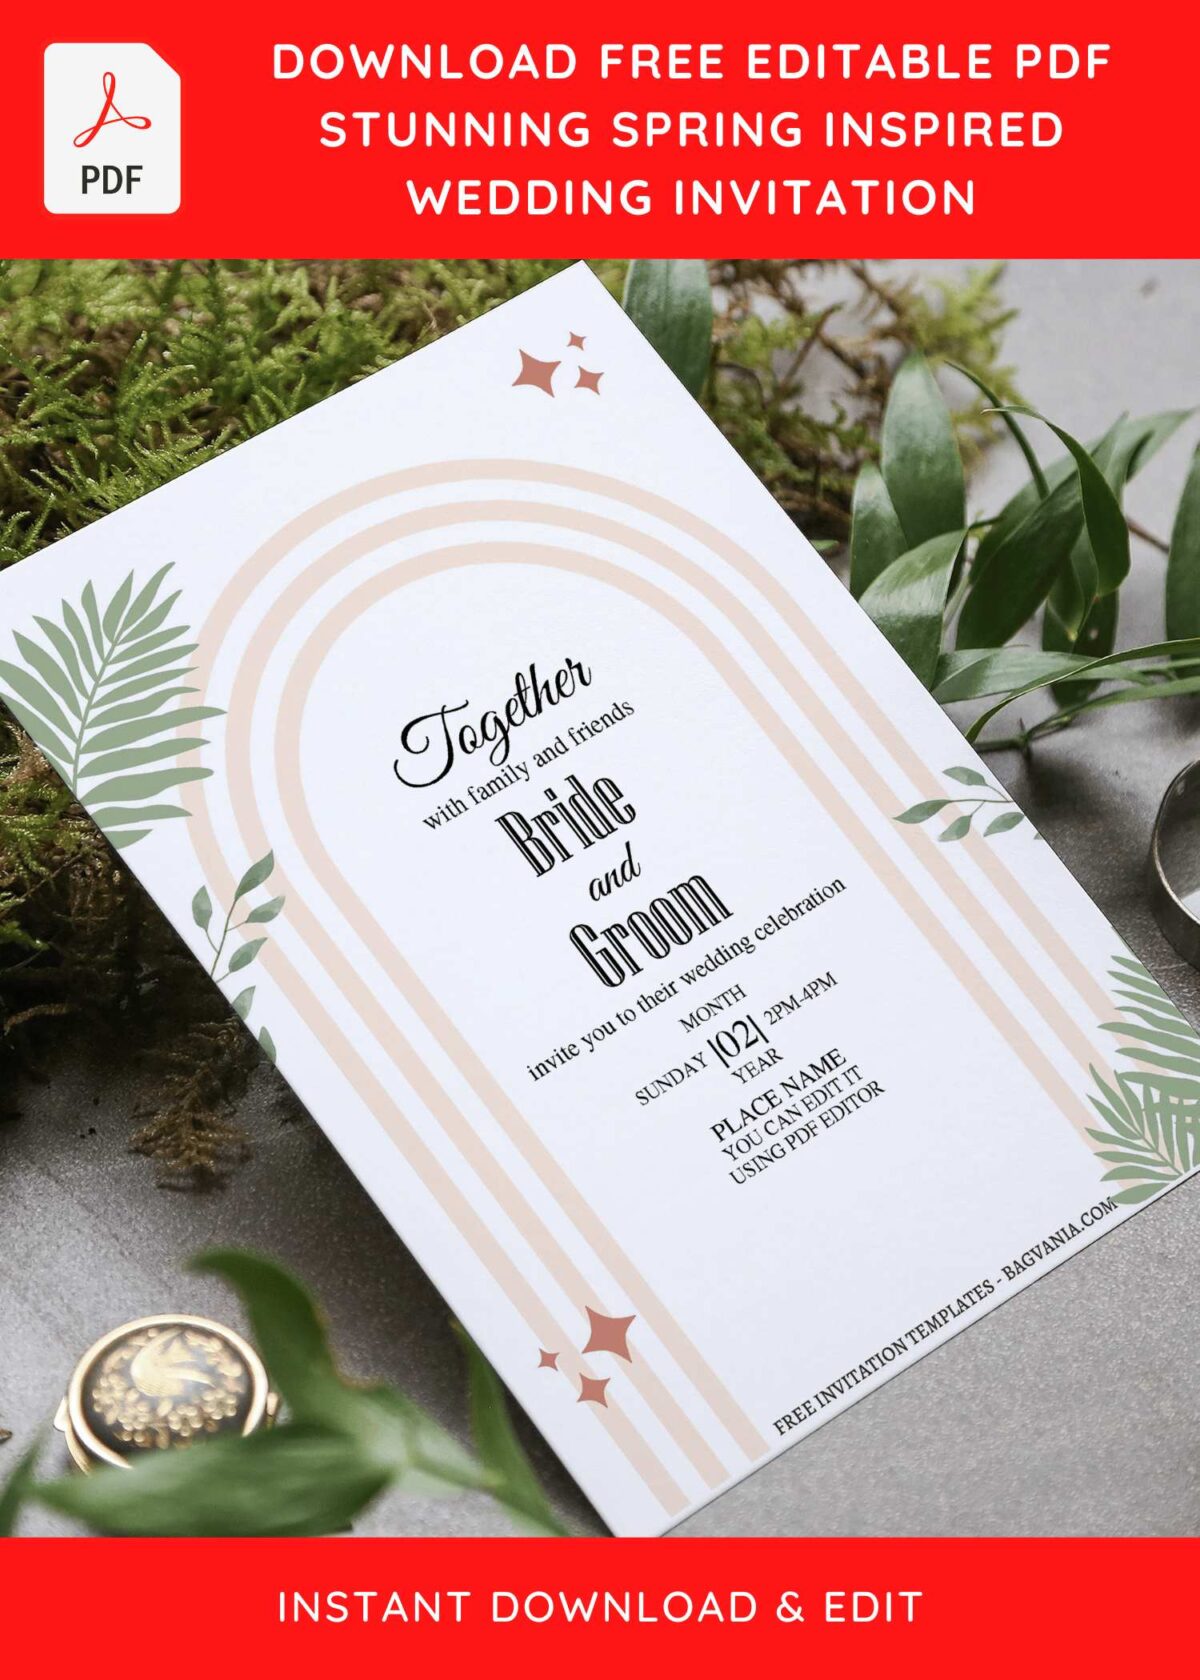 (Free Editable PDF) Boho Chic Wedding Invitation Templates with palm leaves